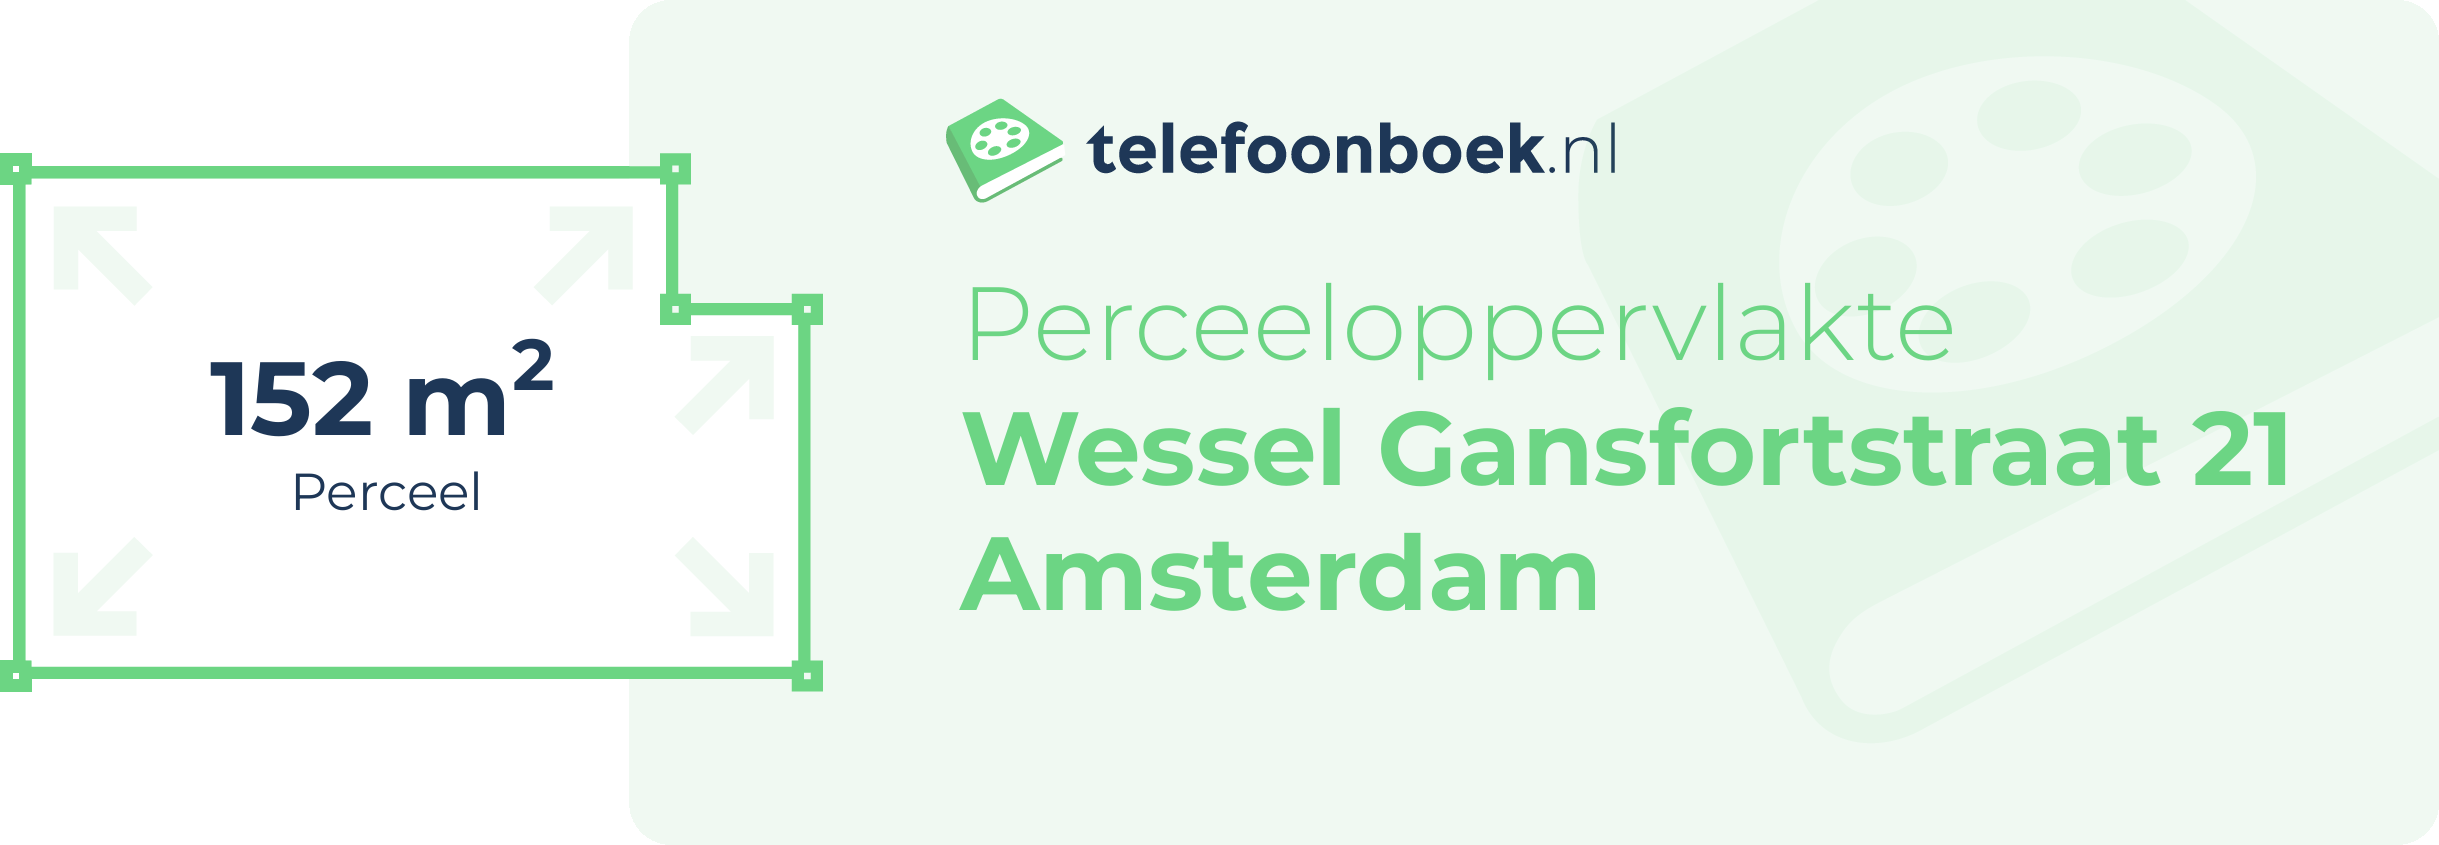 Perceeloppervlakte Wessel Gansfortstraat 21 Amsterdam